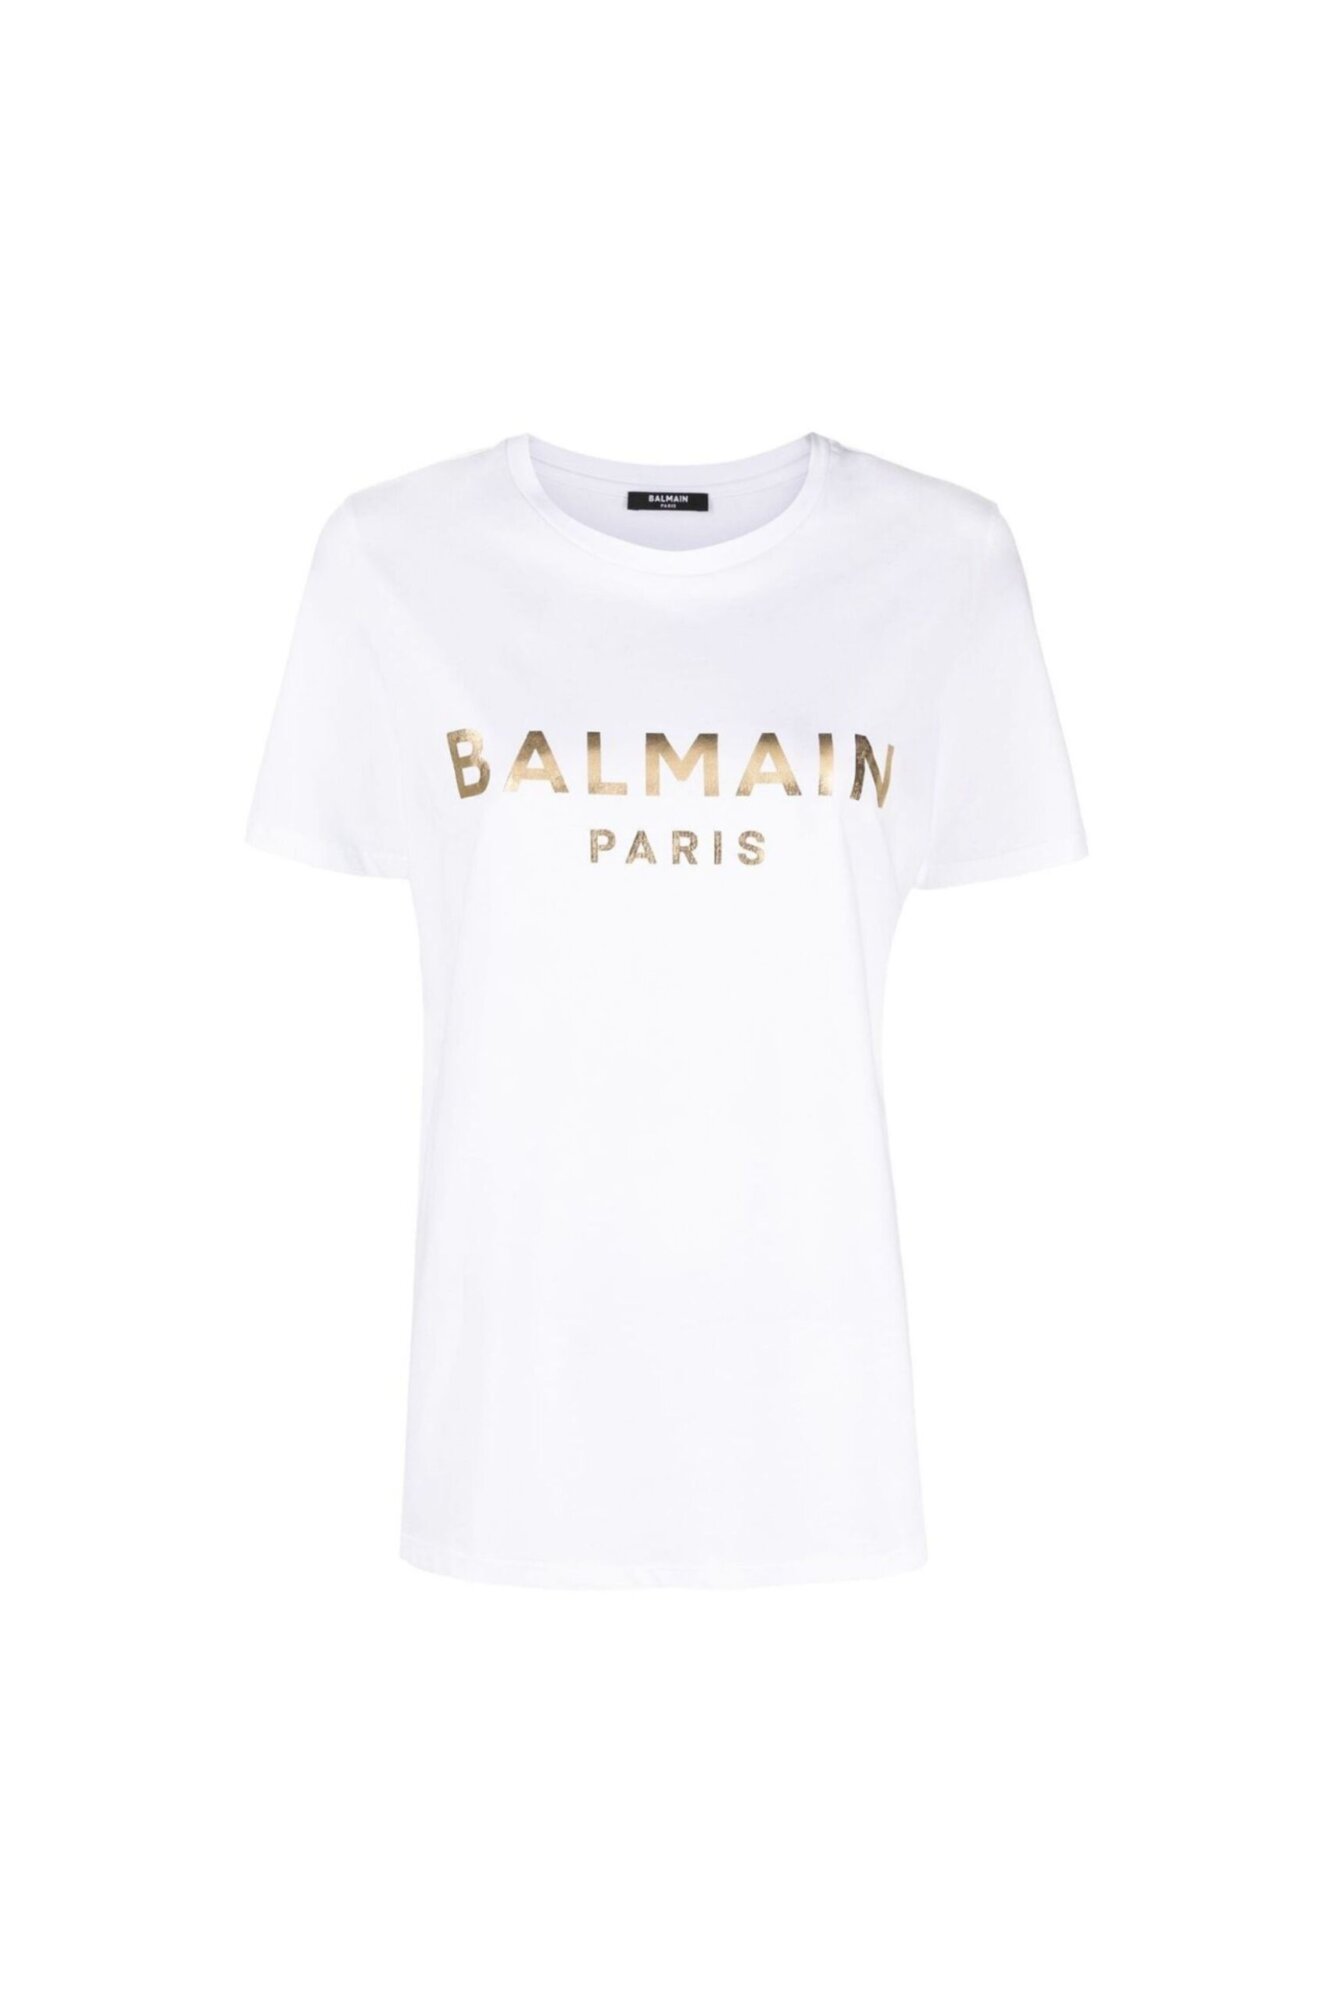 -25% Balmain Paris T Shirt Con Logo